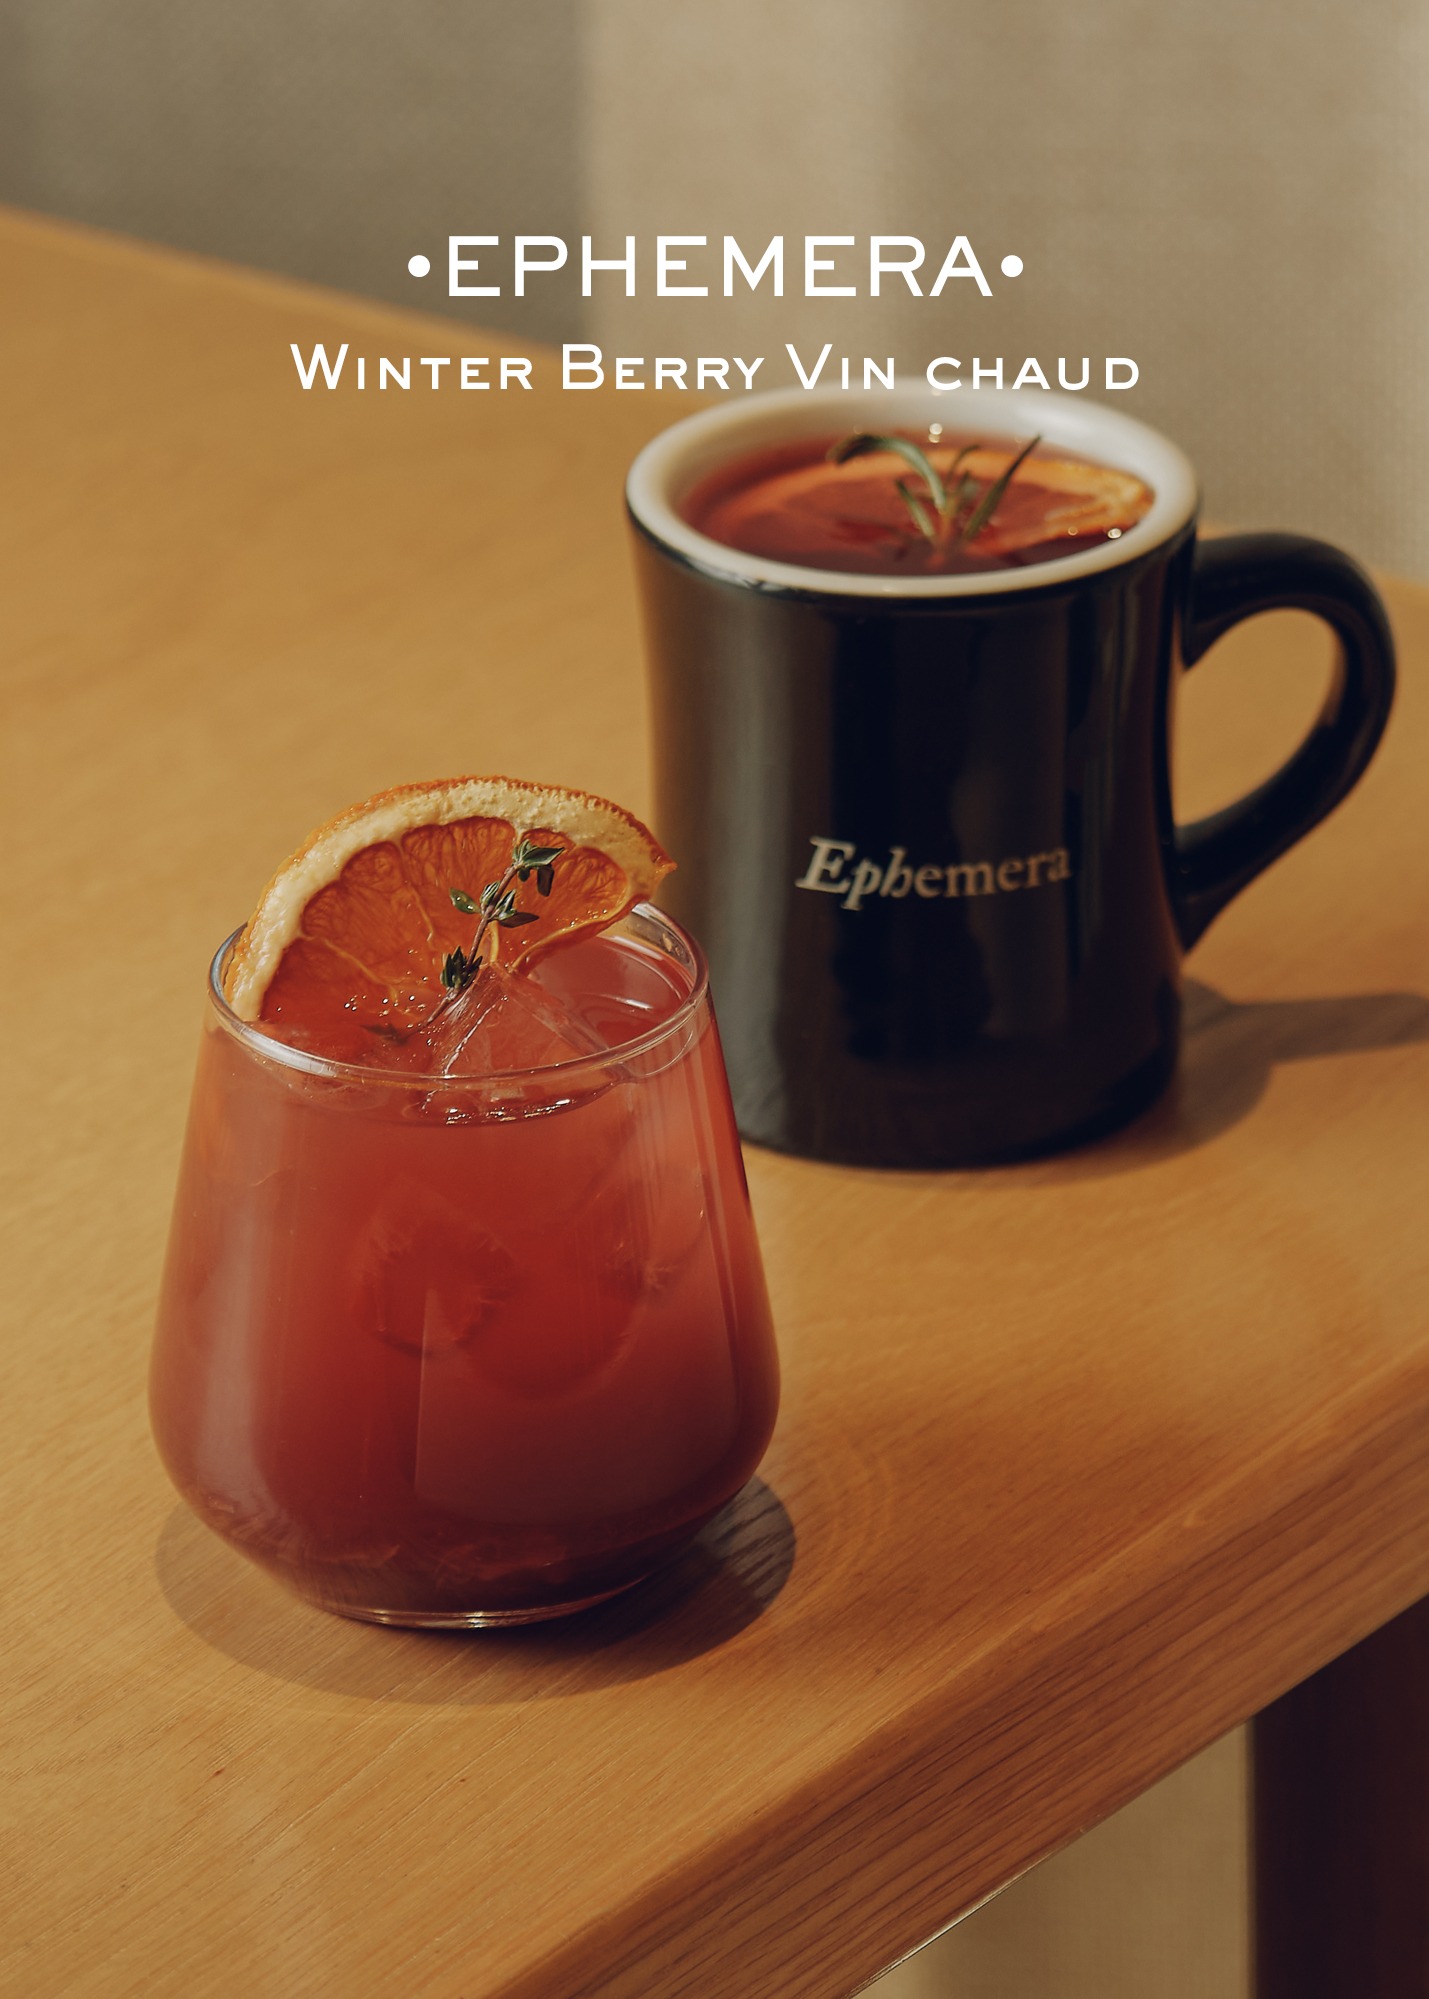 Winter Berry Vin chaud